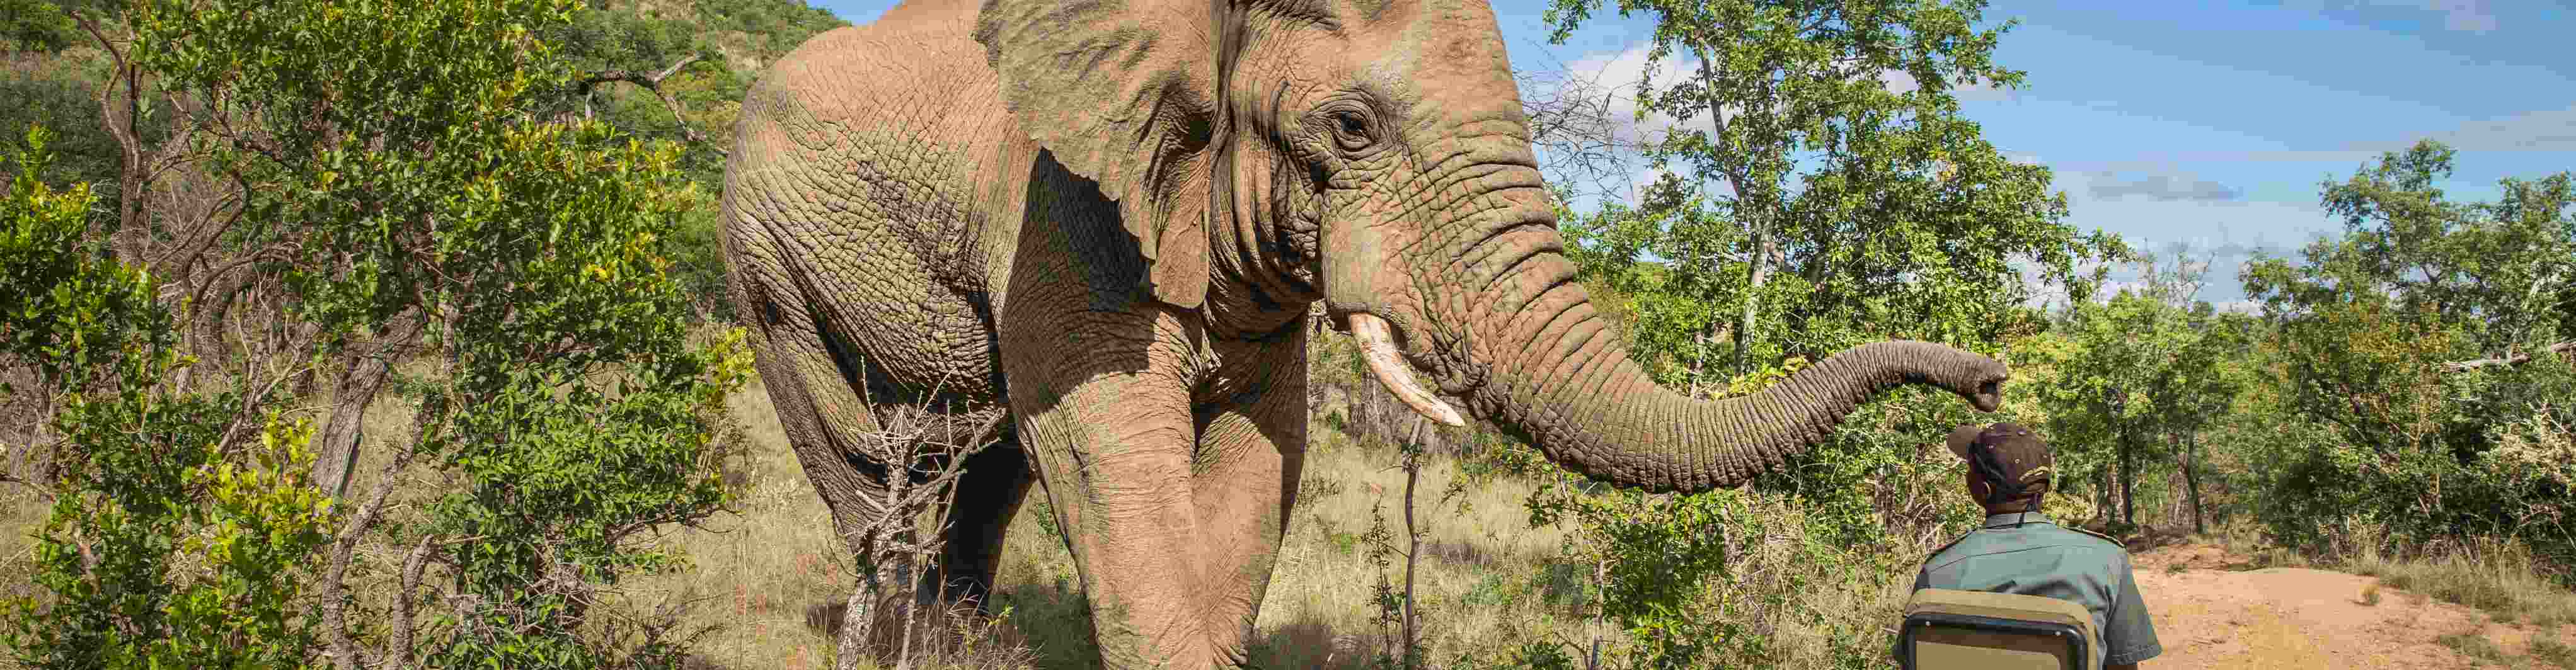 A safari vehicle encounters a curious elephant